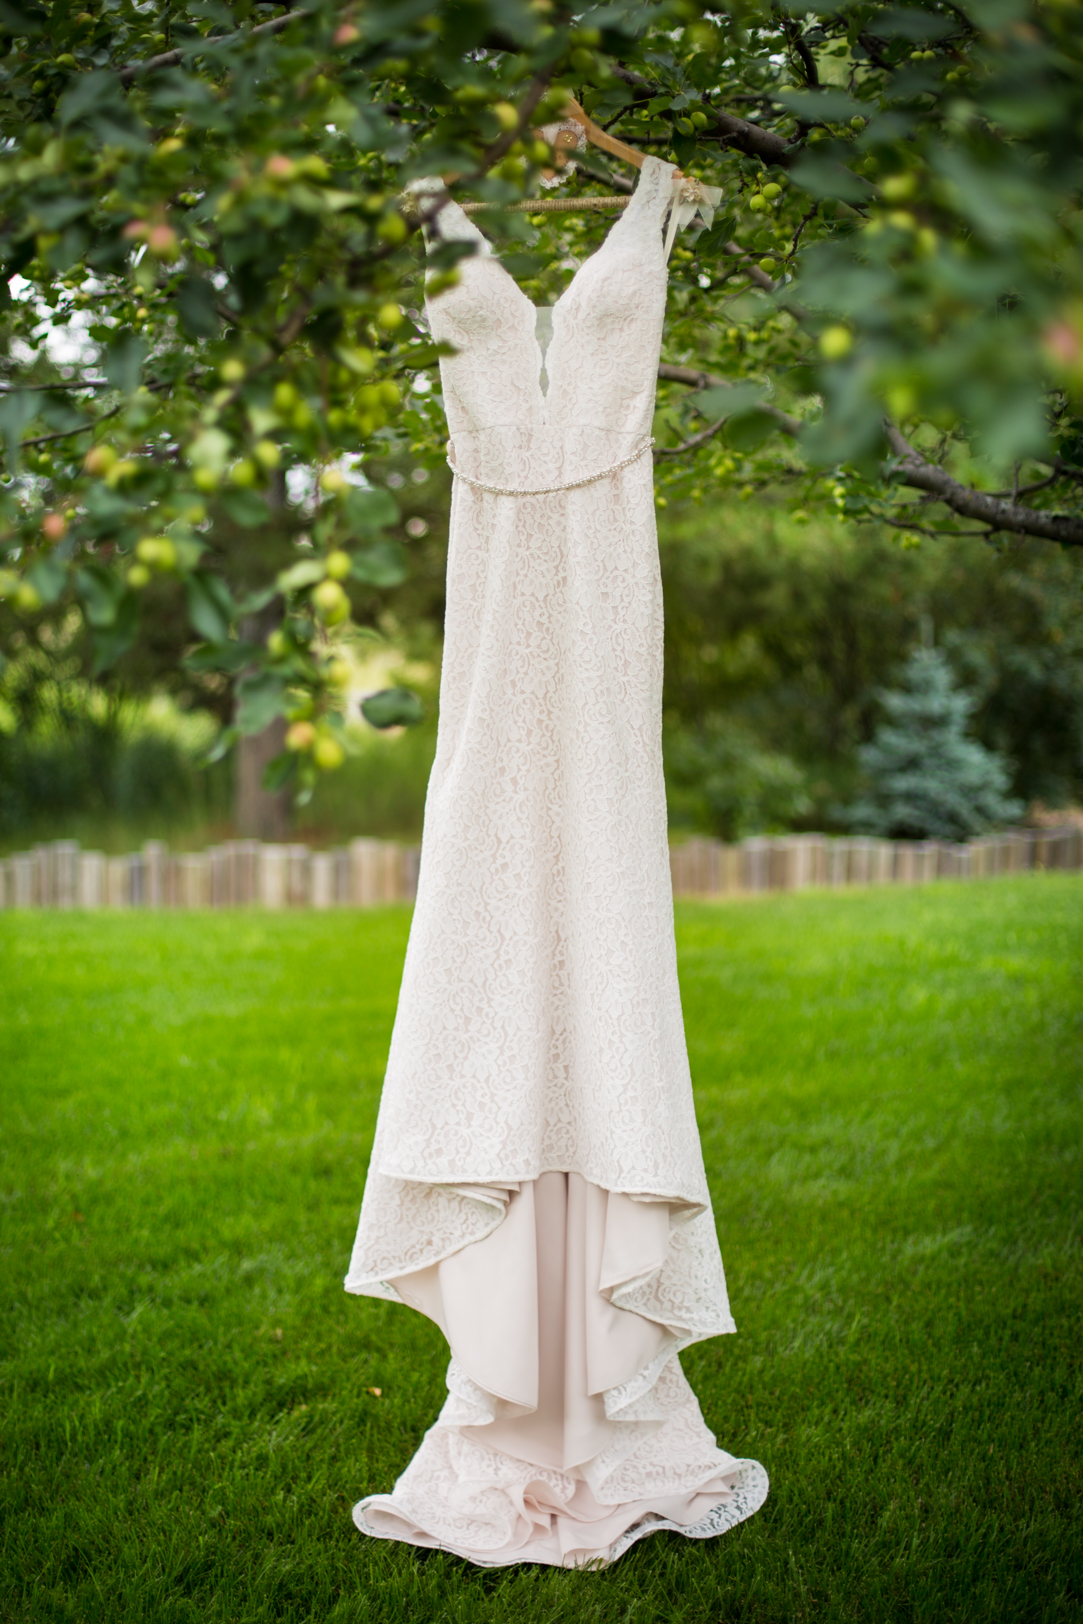 Wedding Dress Hanging in Tree